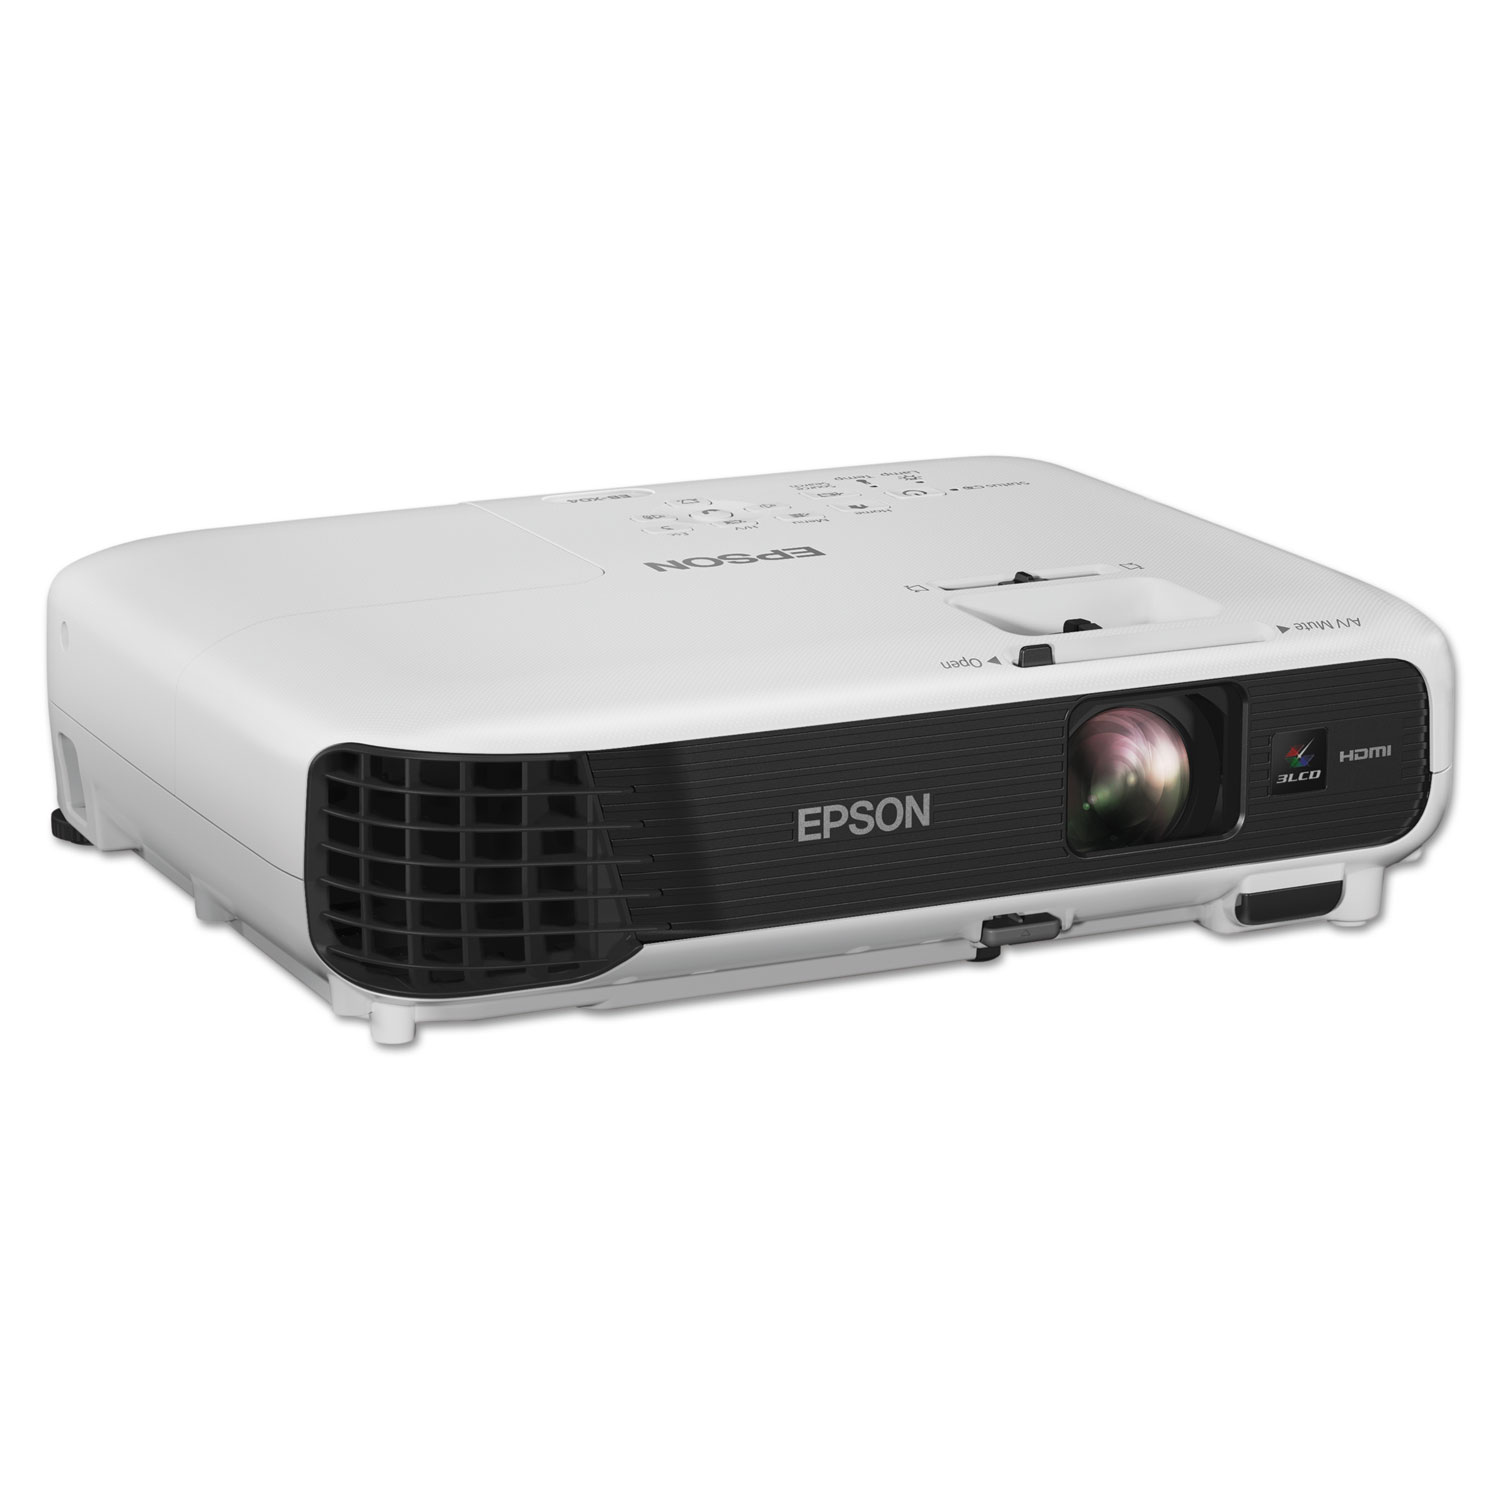 VS340 XGA 3LCD Projector, 2800 Lumens, 1024 x 768 Pixels, 1.2x Zoom